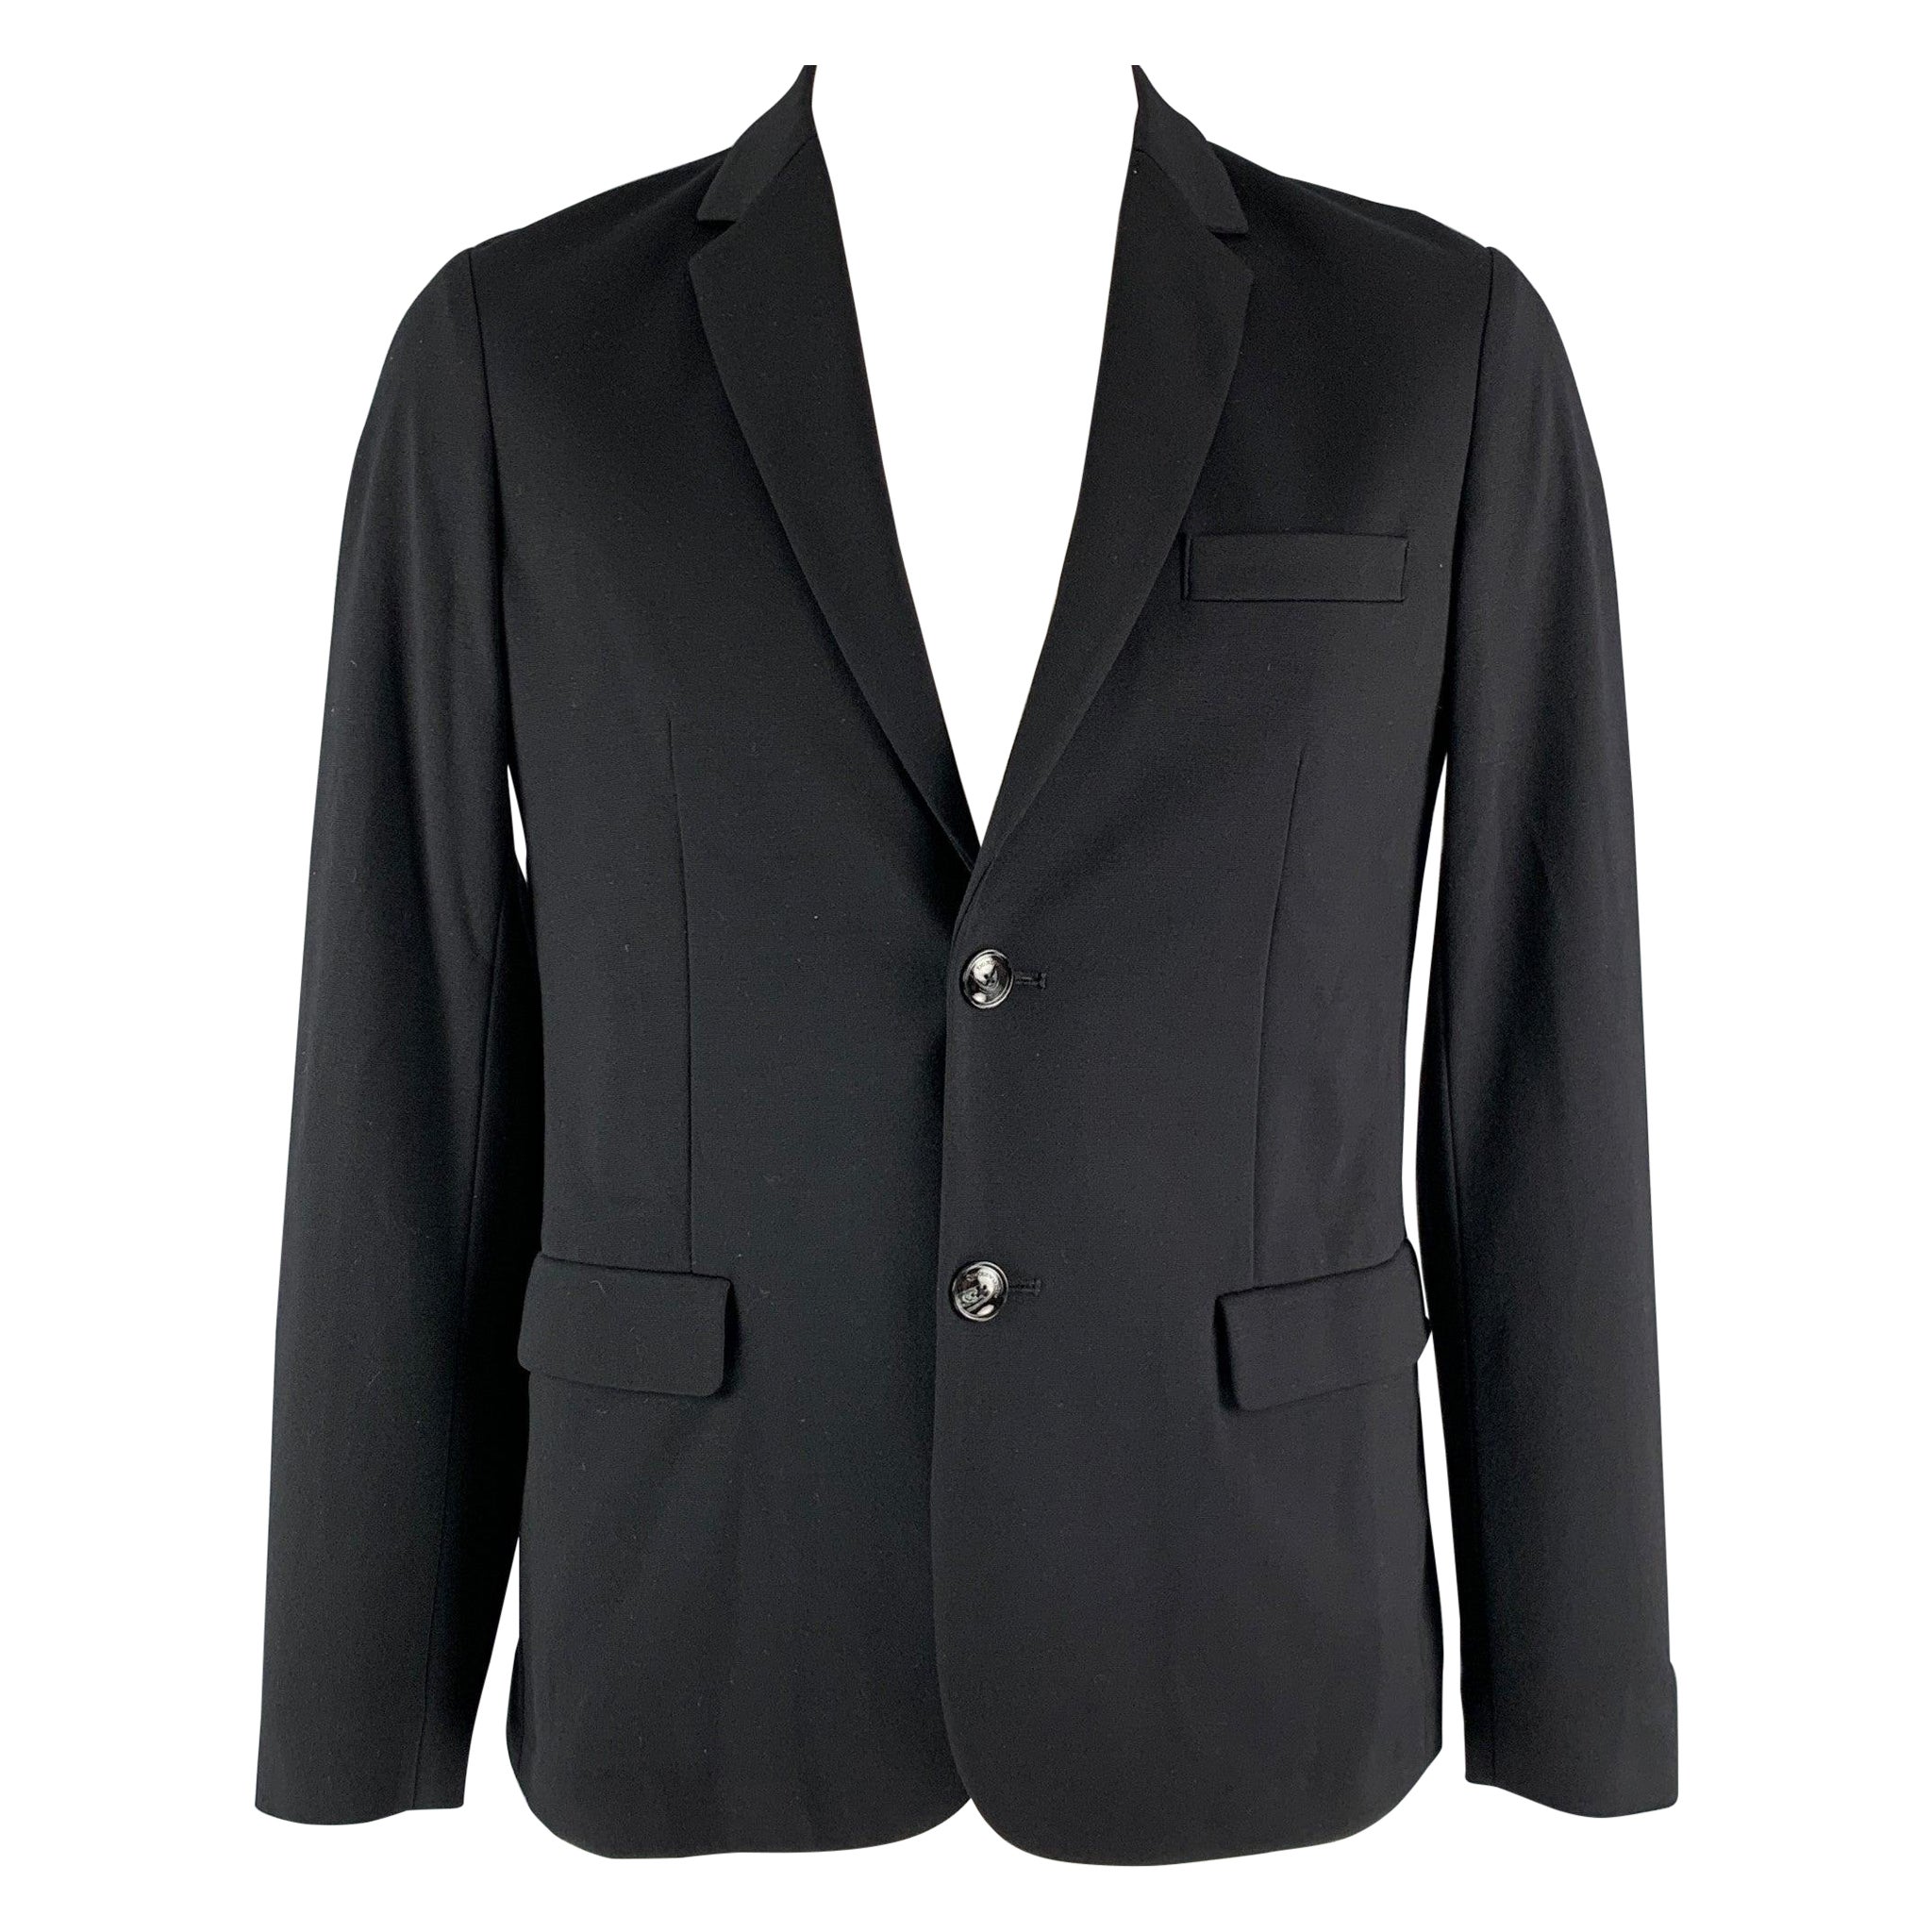 EMPORIO ARMANI Size 42 Black Solid Viscose Blend Notch Lapel Sport Coat For Sale